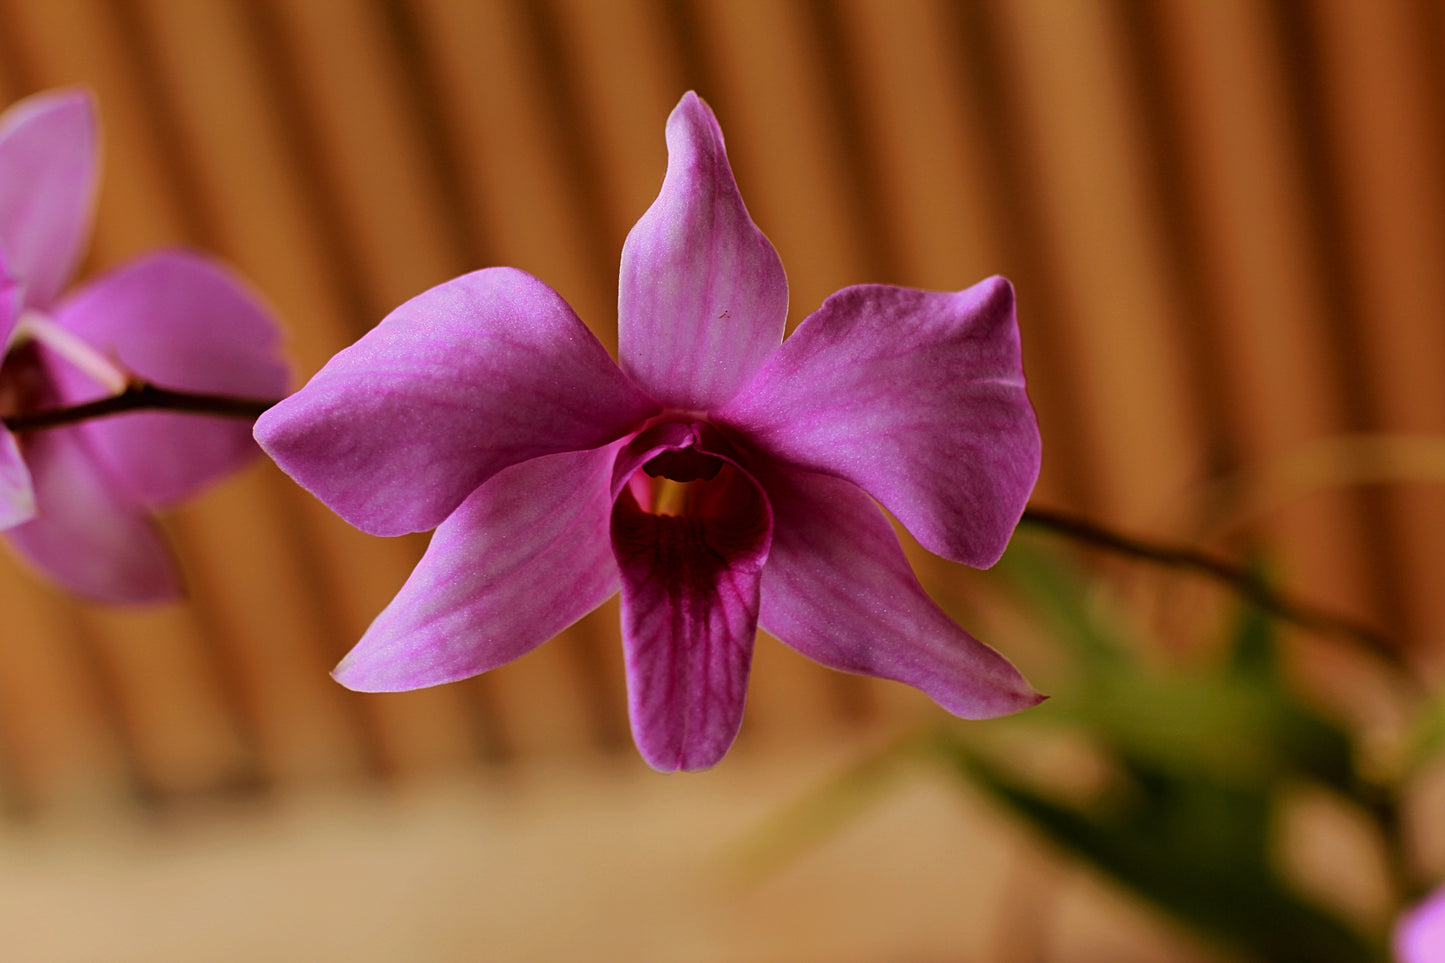 The Cooktown Orchid - Dendrobium bigibbum